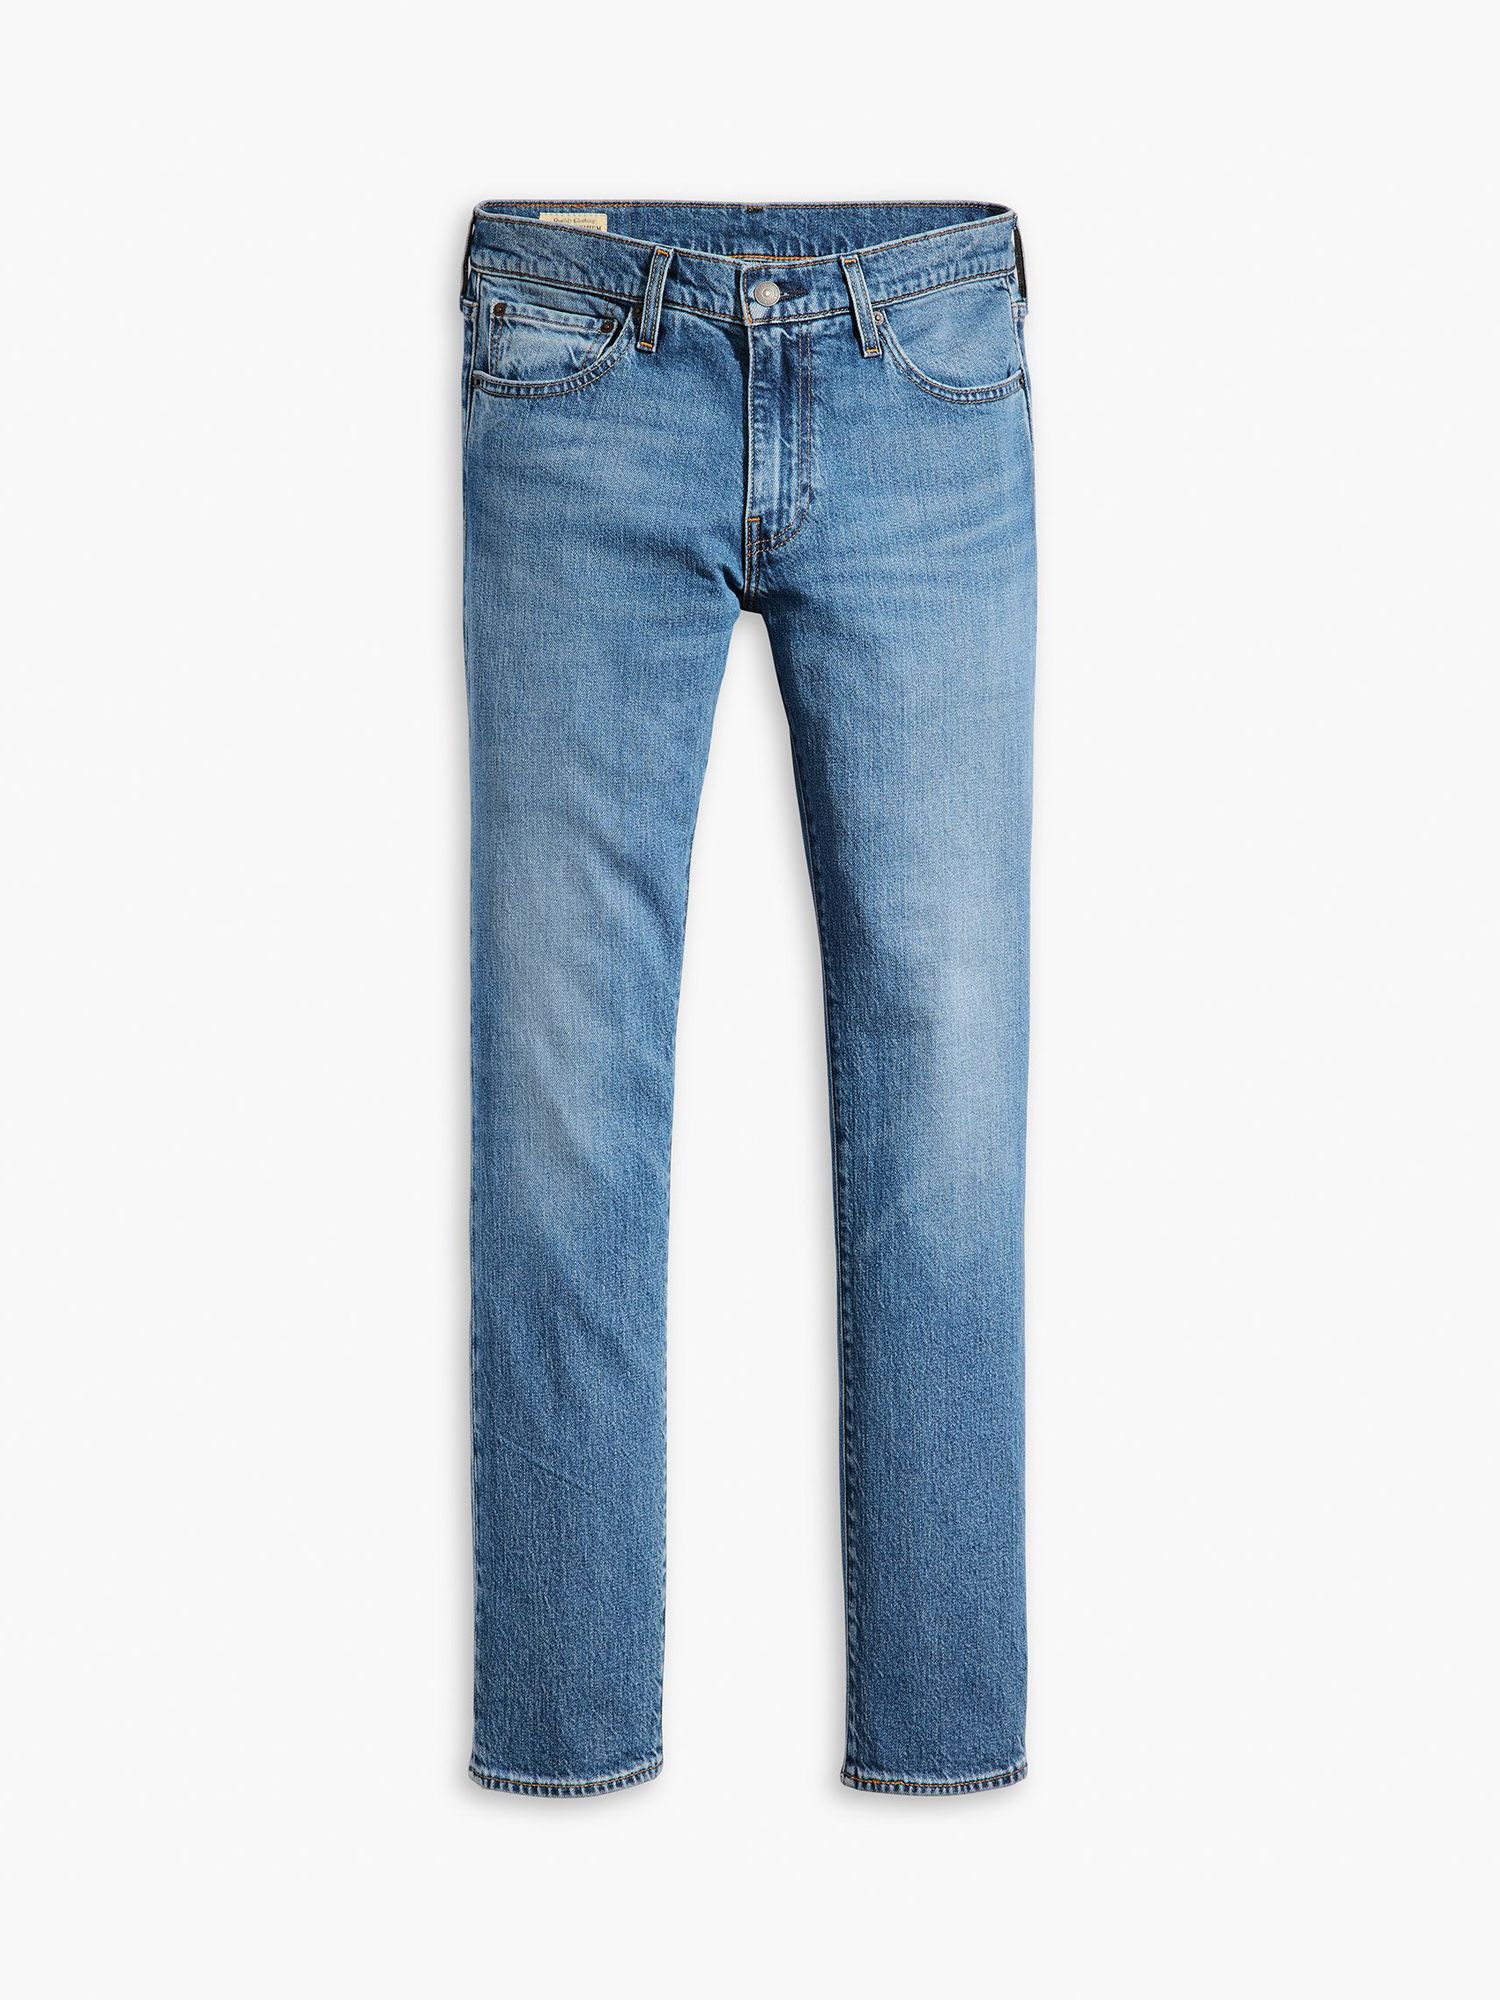 Buy Levi's 511 Slim Fit Jeans, Blue Online at johnlewis.com